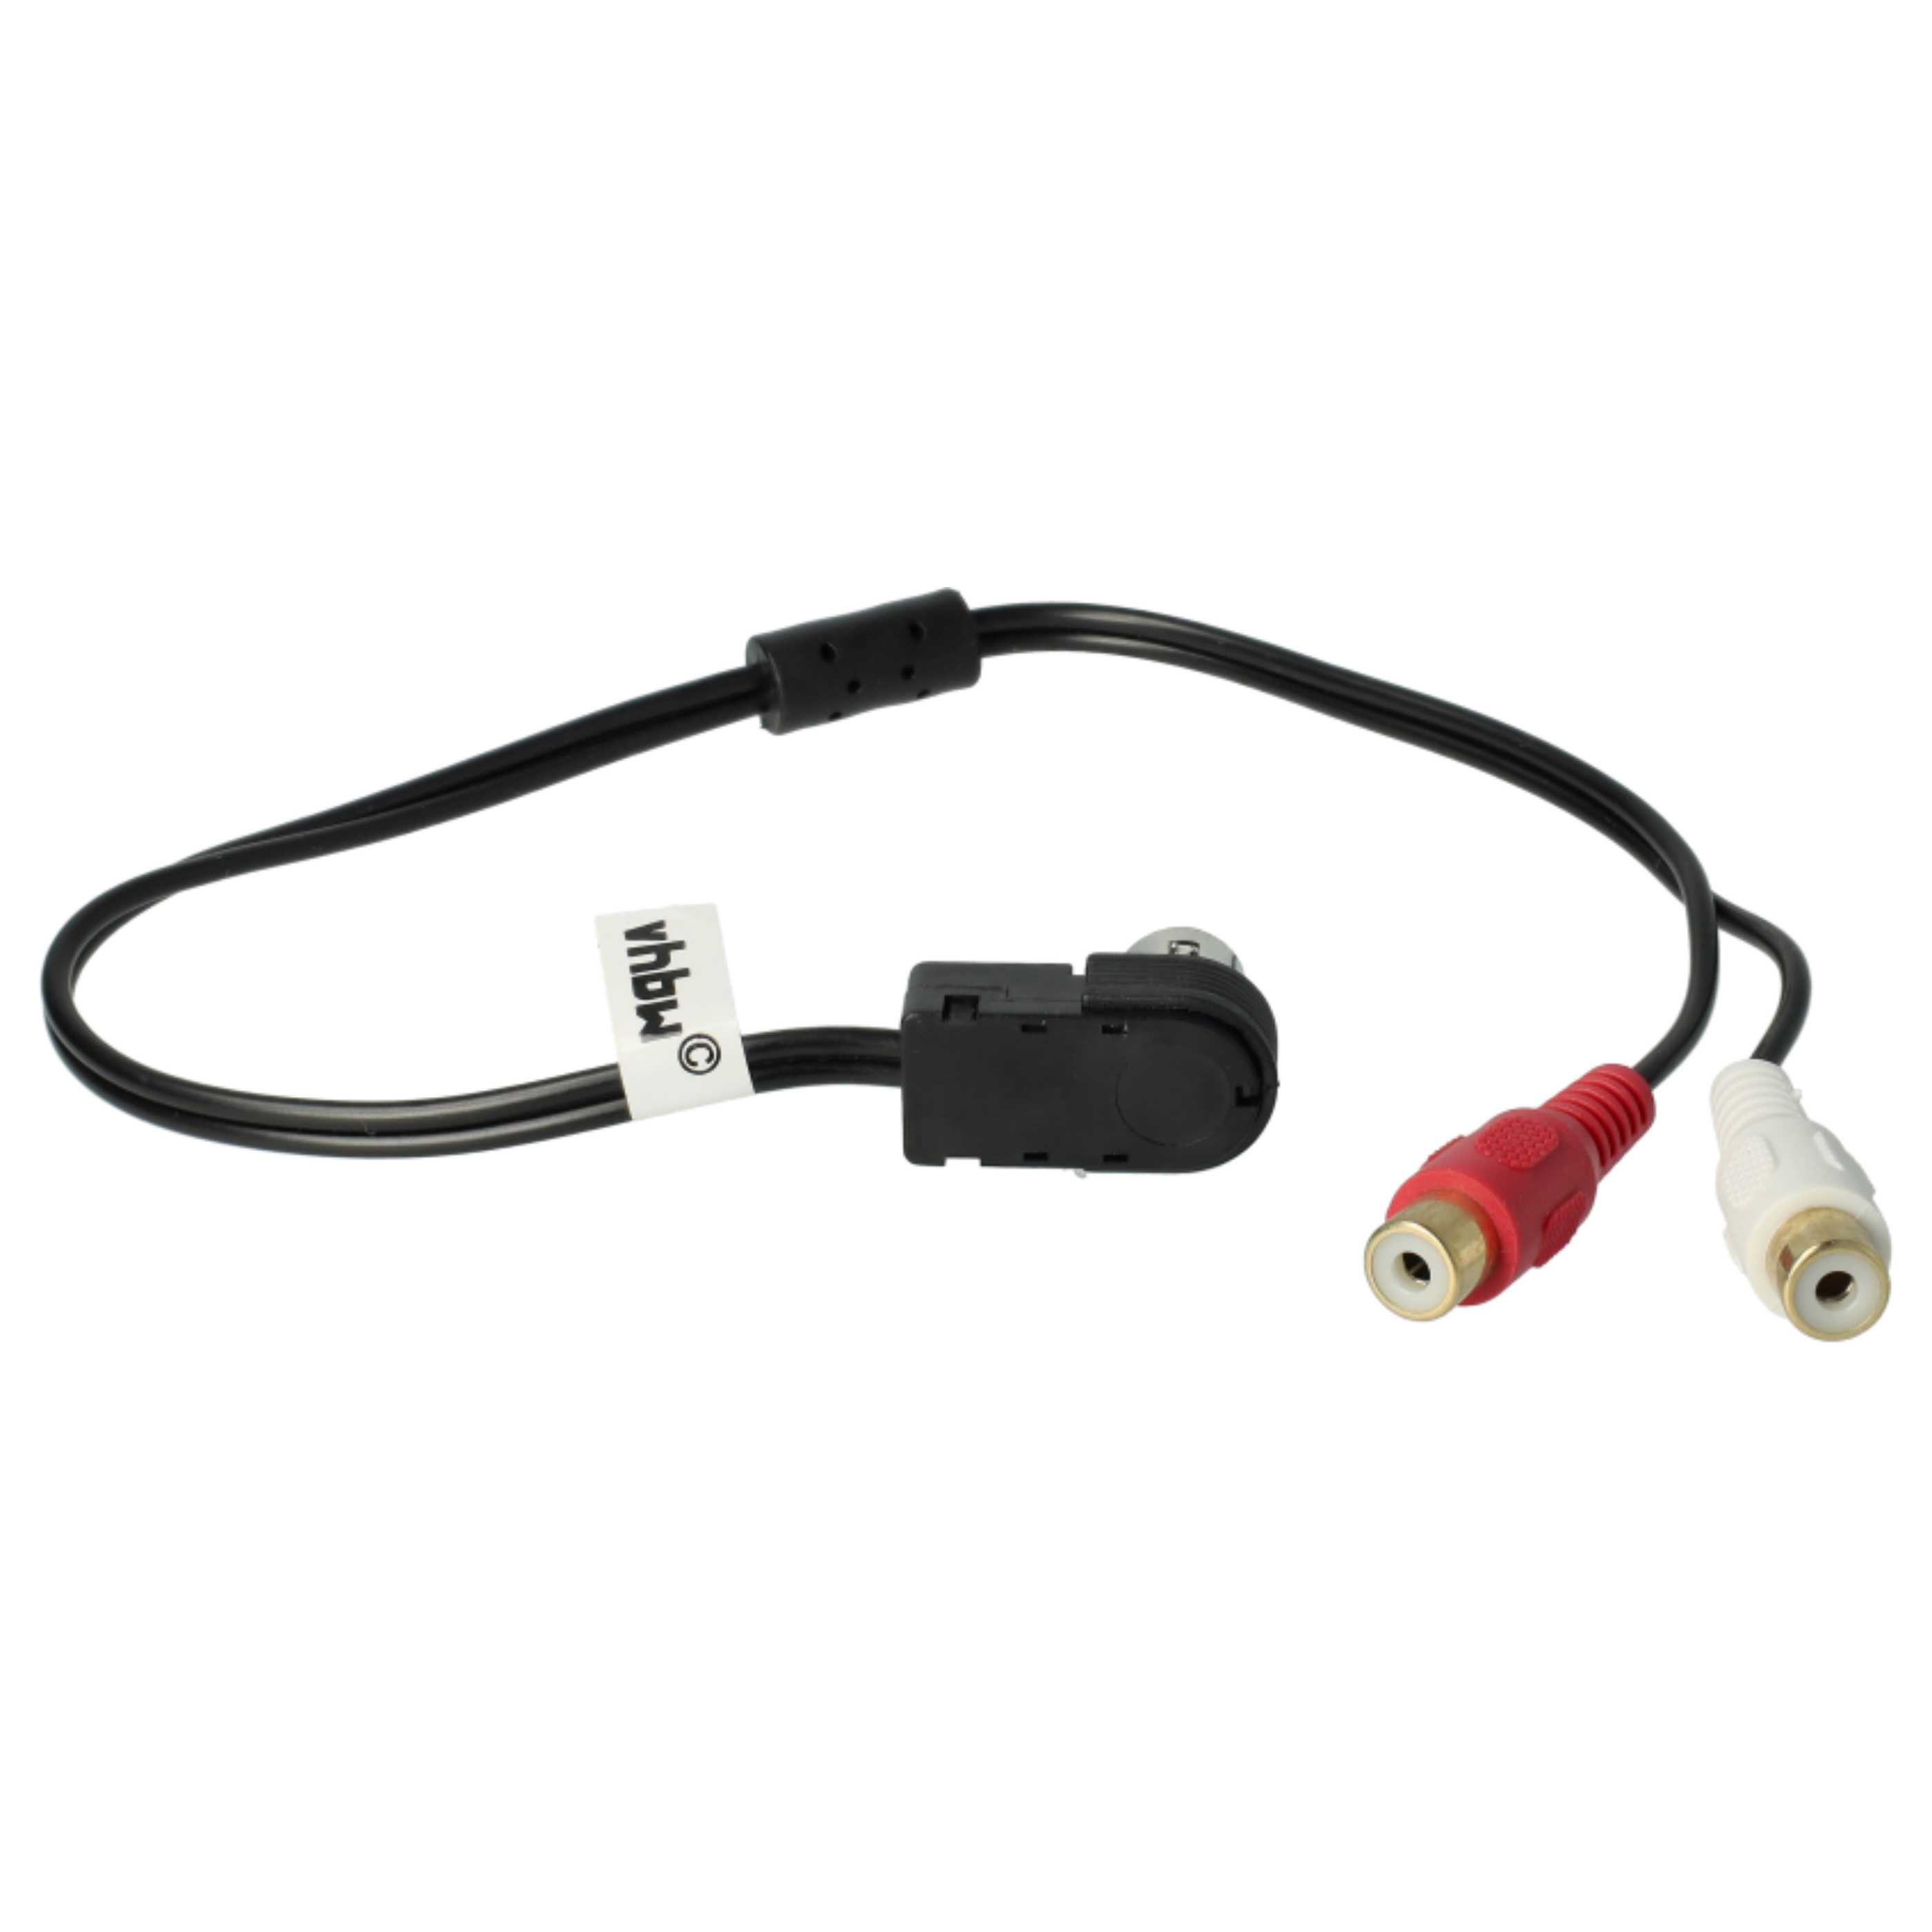 Audio Kabel als Ersatz für JVC KS-U57 für Autoradio - 60 cm lang